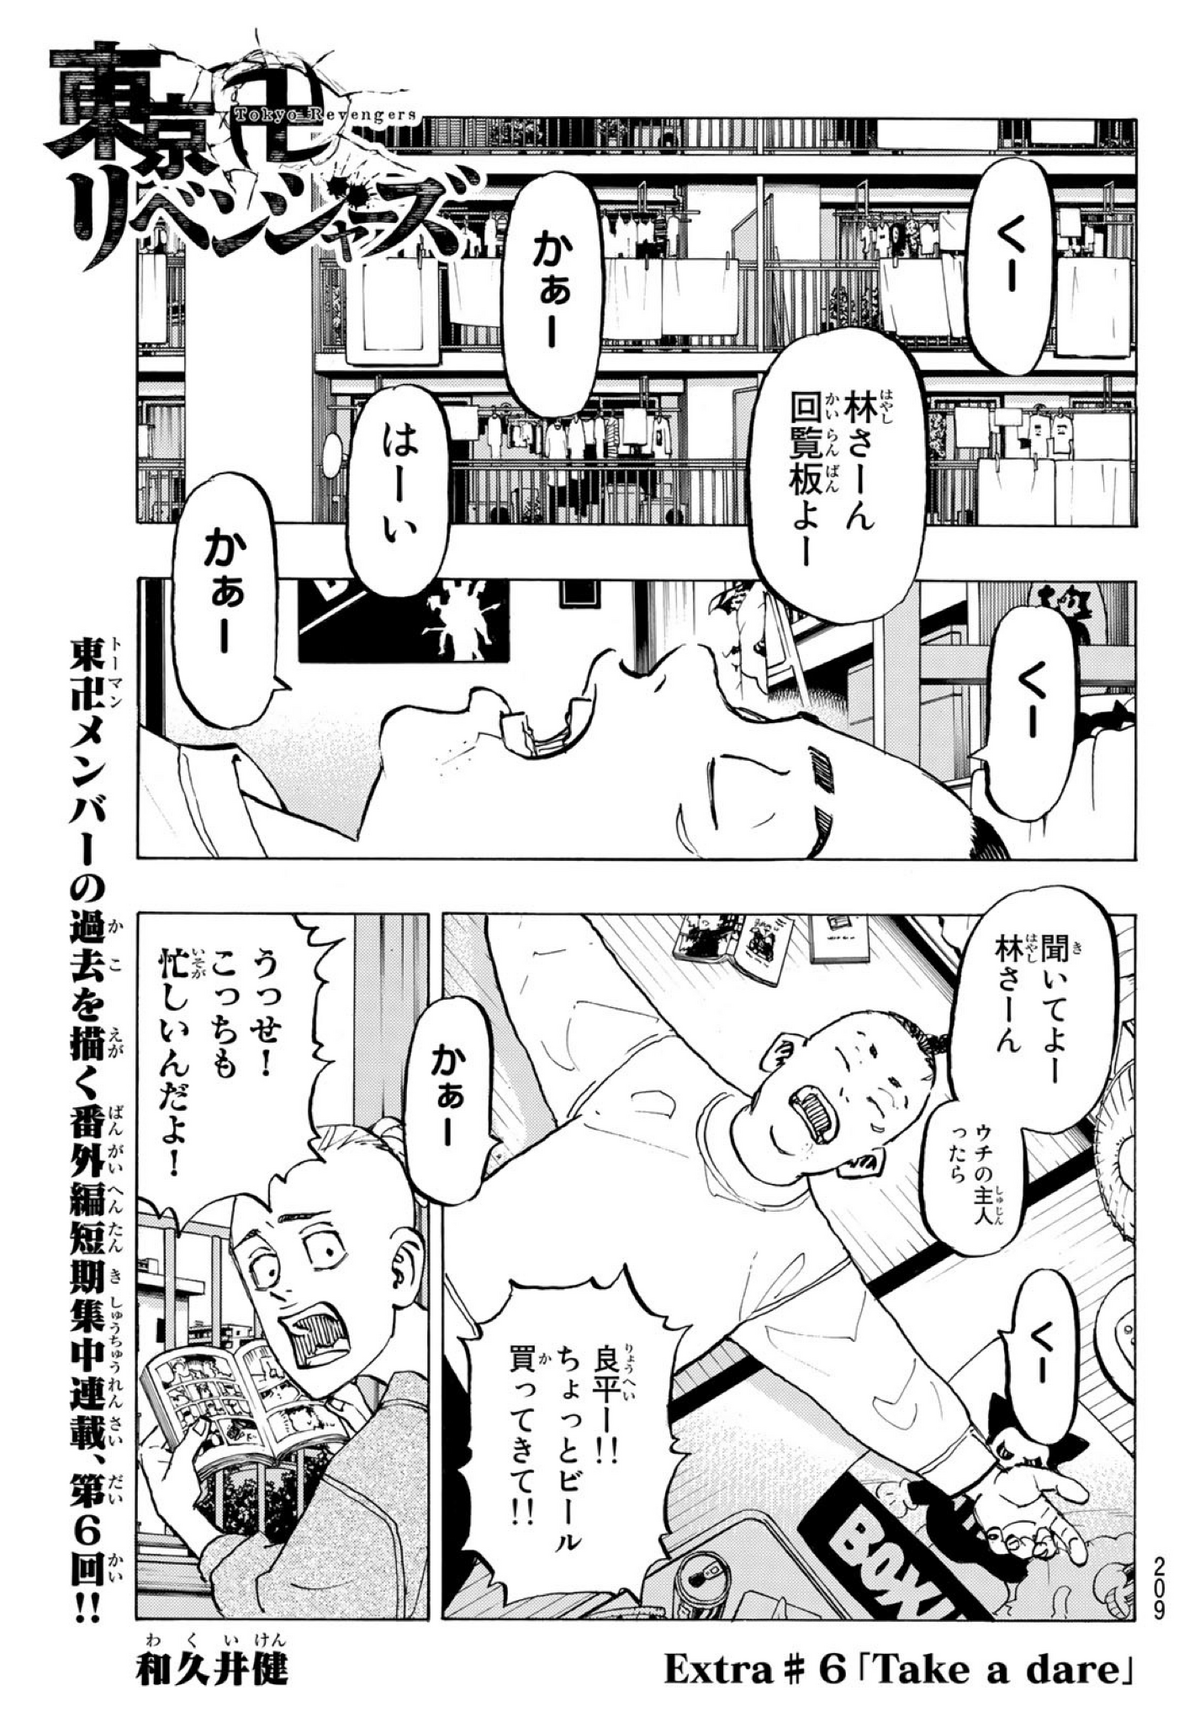 DISC] Domestic na Kanojo chapter 65 : r/manga